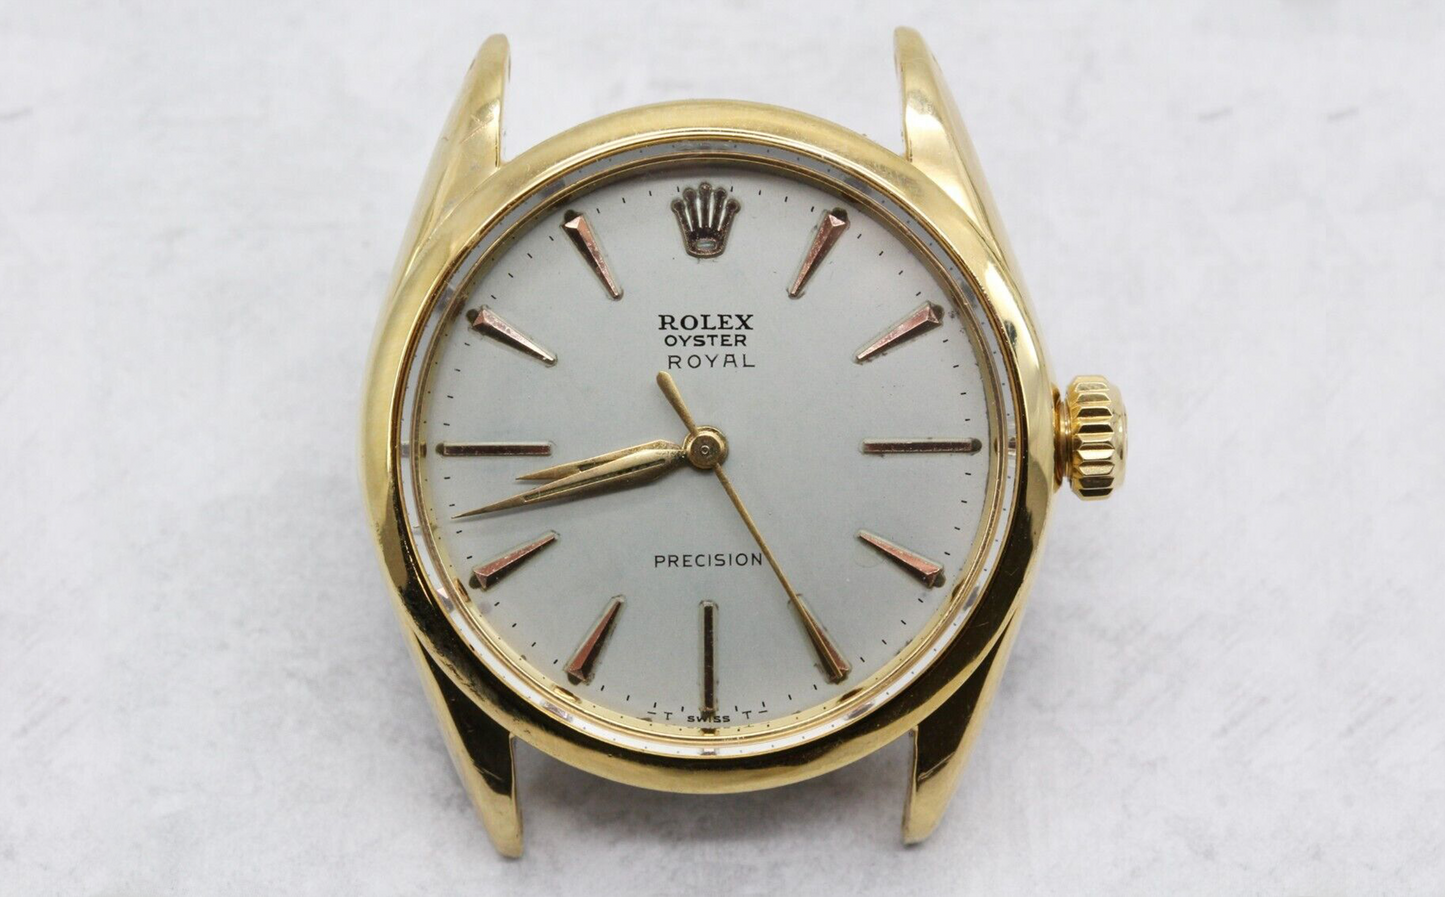 Rolex Oyster Royal Precision Model 6426 34mm Watch Circa 1950s